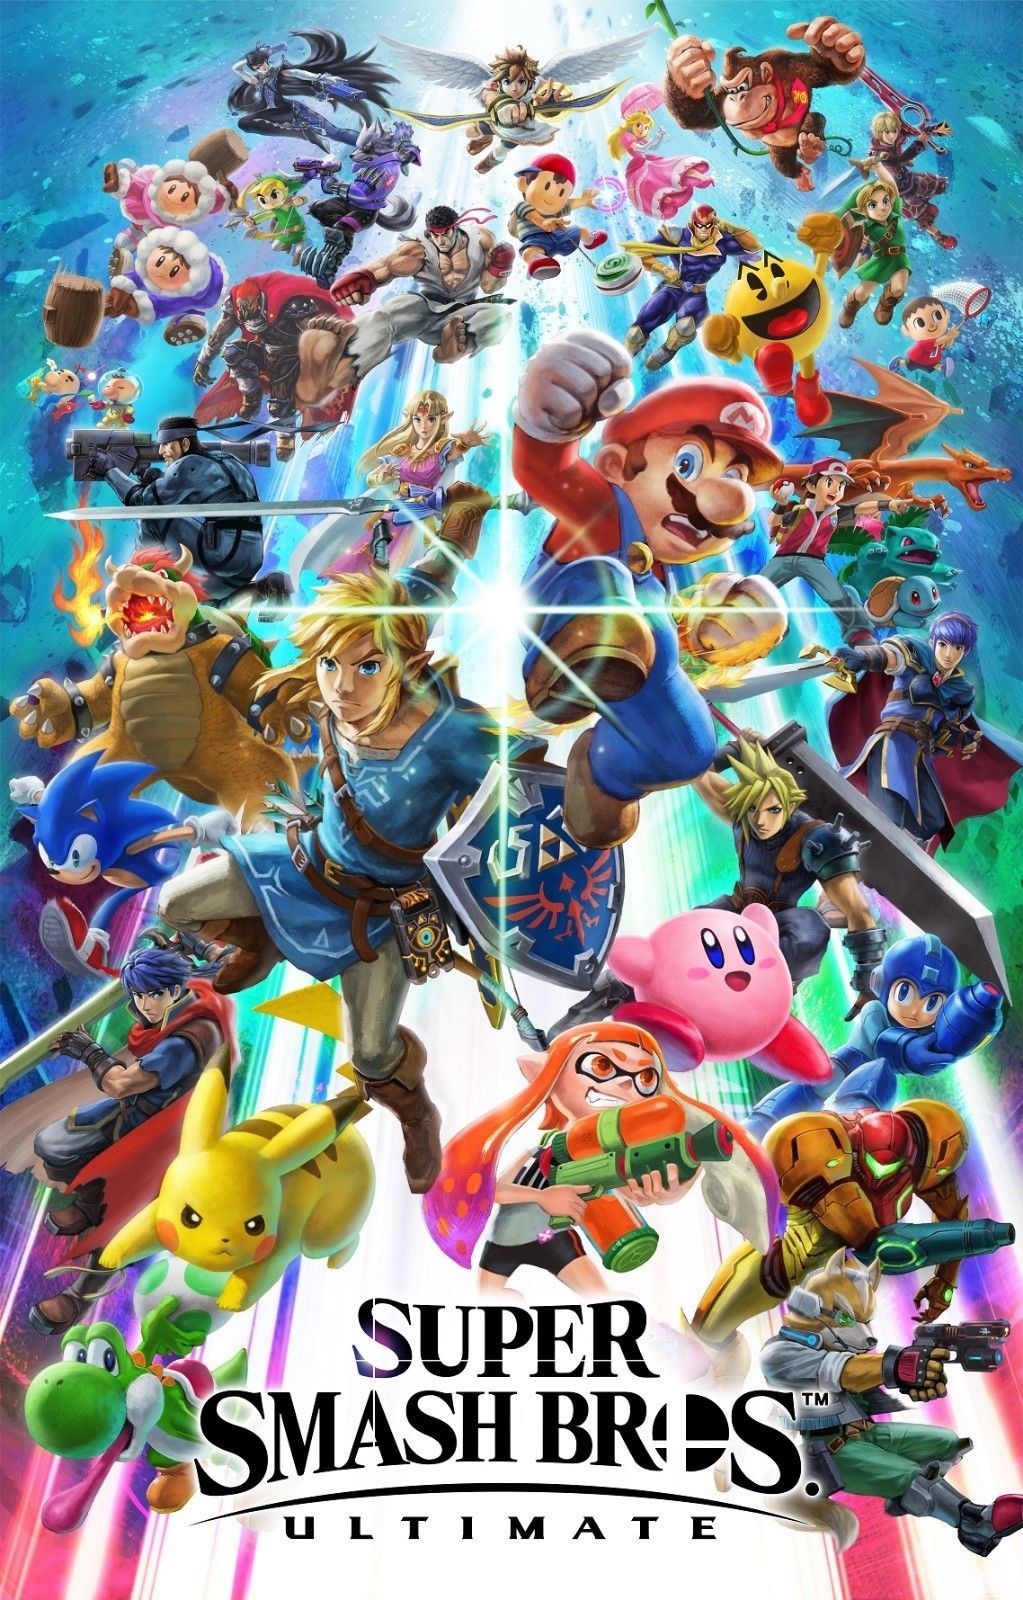 Super Smash Bros Ultimate Poster Video Game Print 14x21 24x36 27x40 32x48 #1